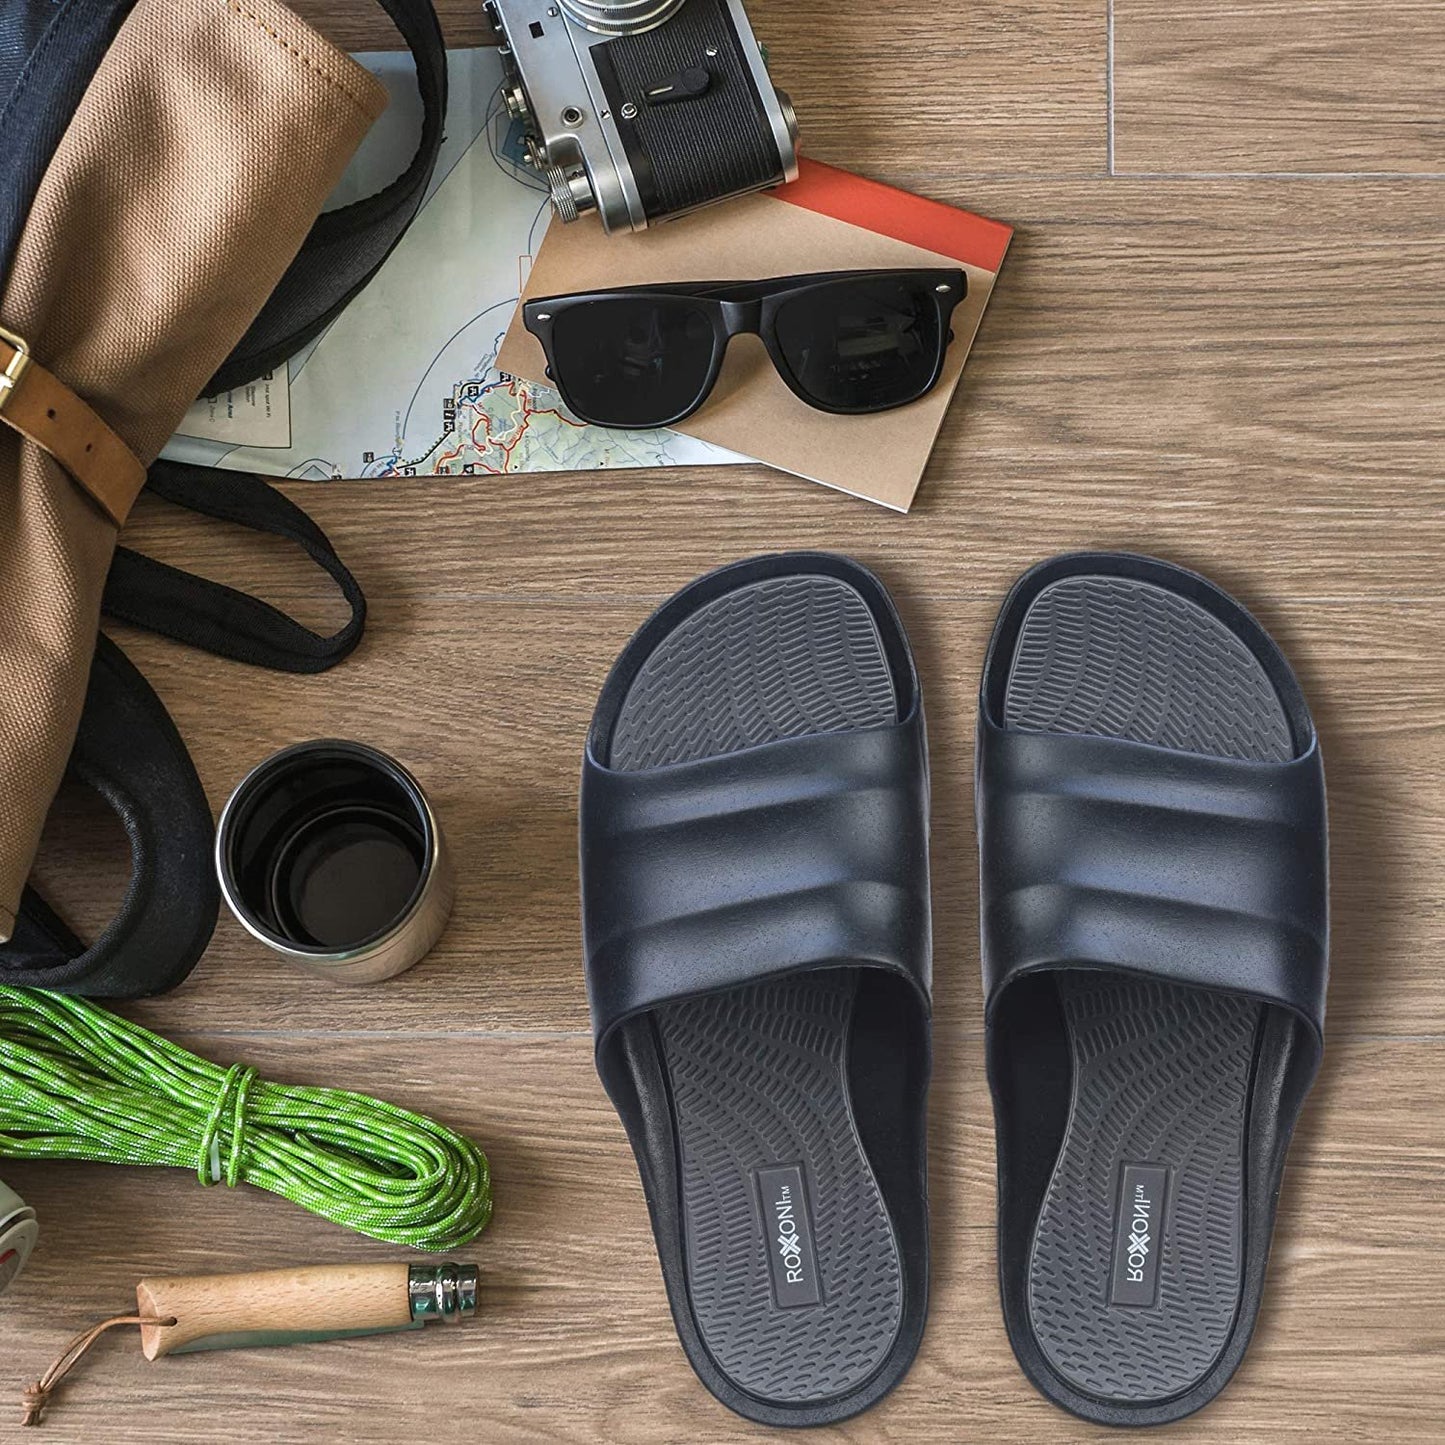 Roxoni Men's Comfort Open Toe Slide Sandals, Anti Skid Rubber Sole, -sizes 8 to 13 -style #1245